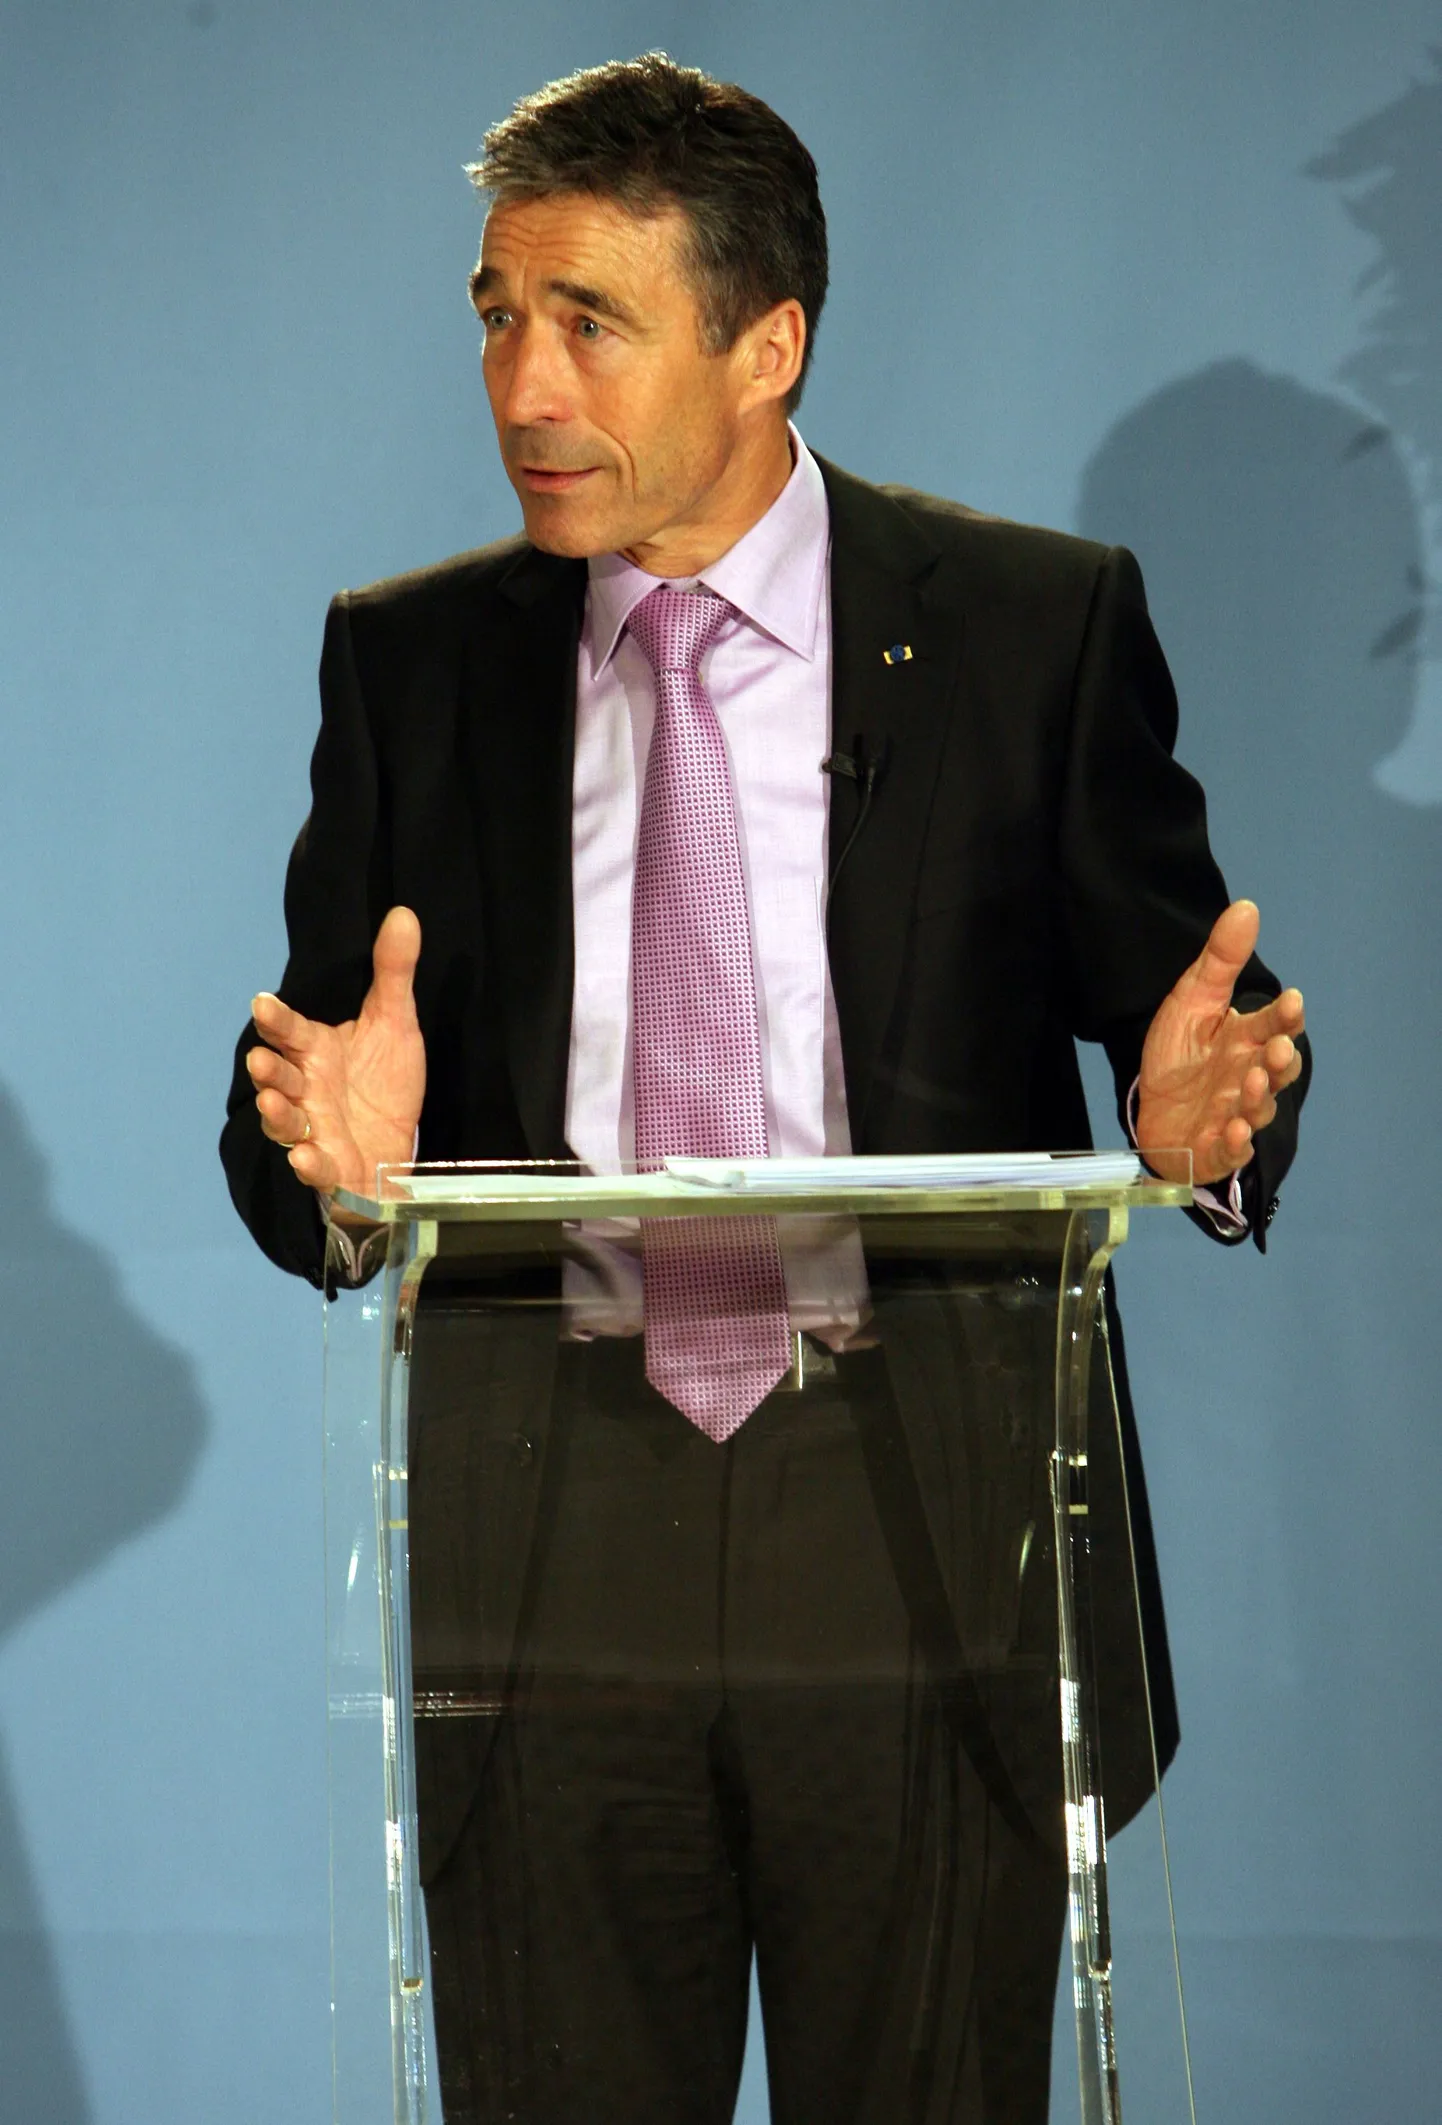 NATO peasekretär Anders Fogh Rasmussen konverentsil Tallinnas Nordic Hotel Forumis kõnelemas.